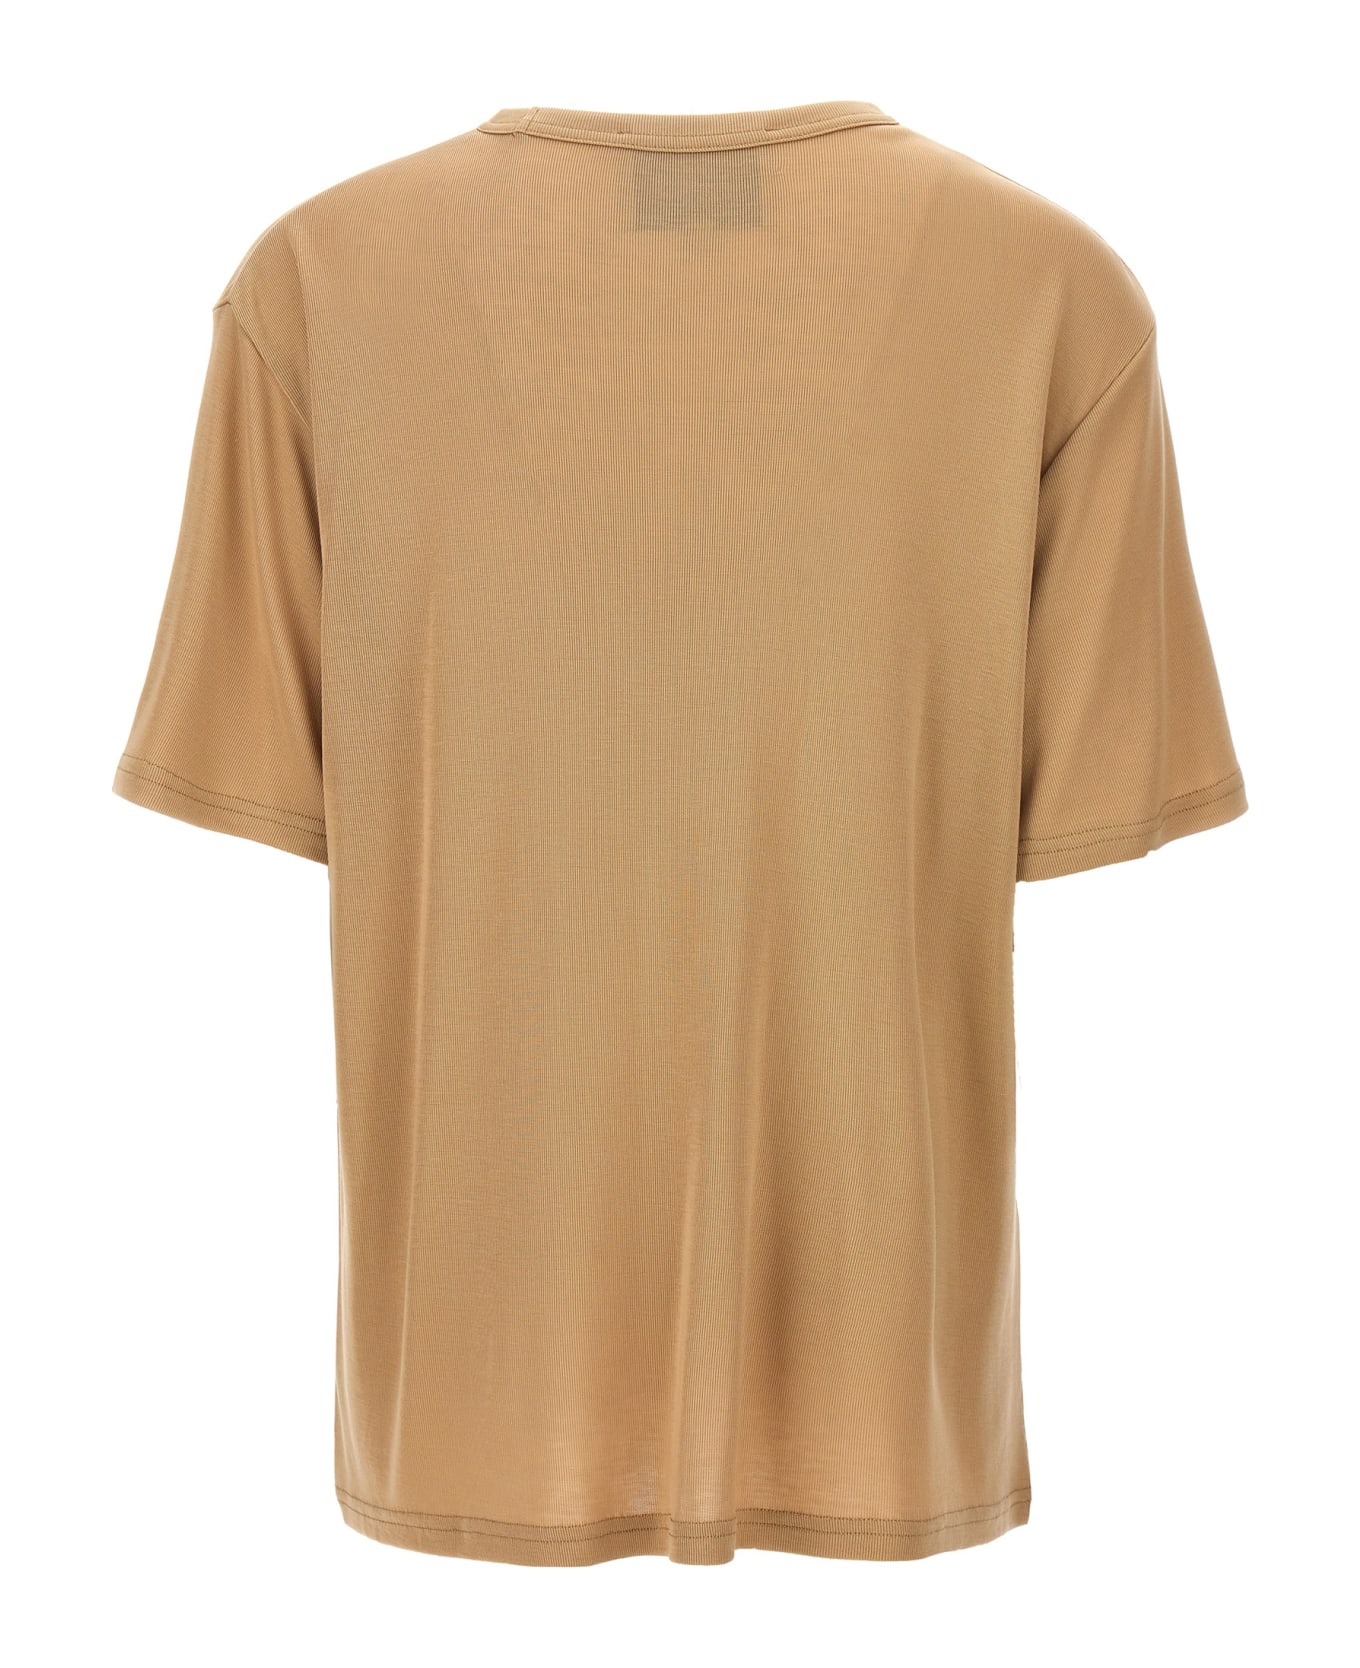 Studio Nicholson 'rond' T-shirt - Beige Tシャツ